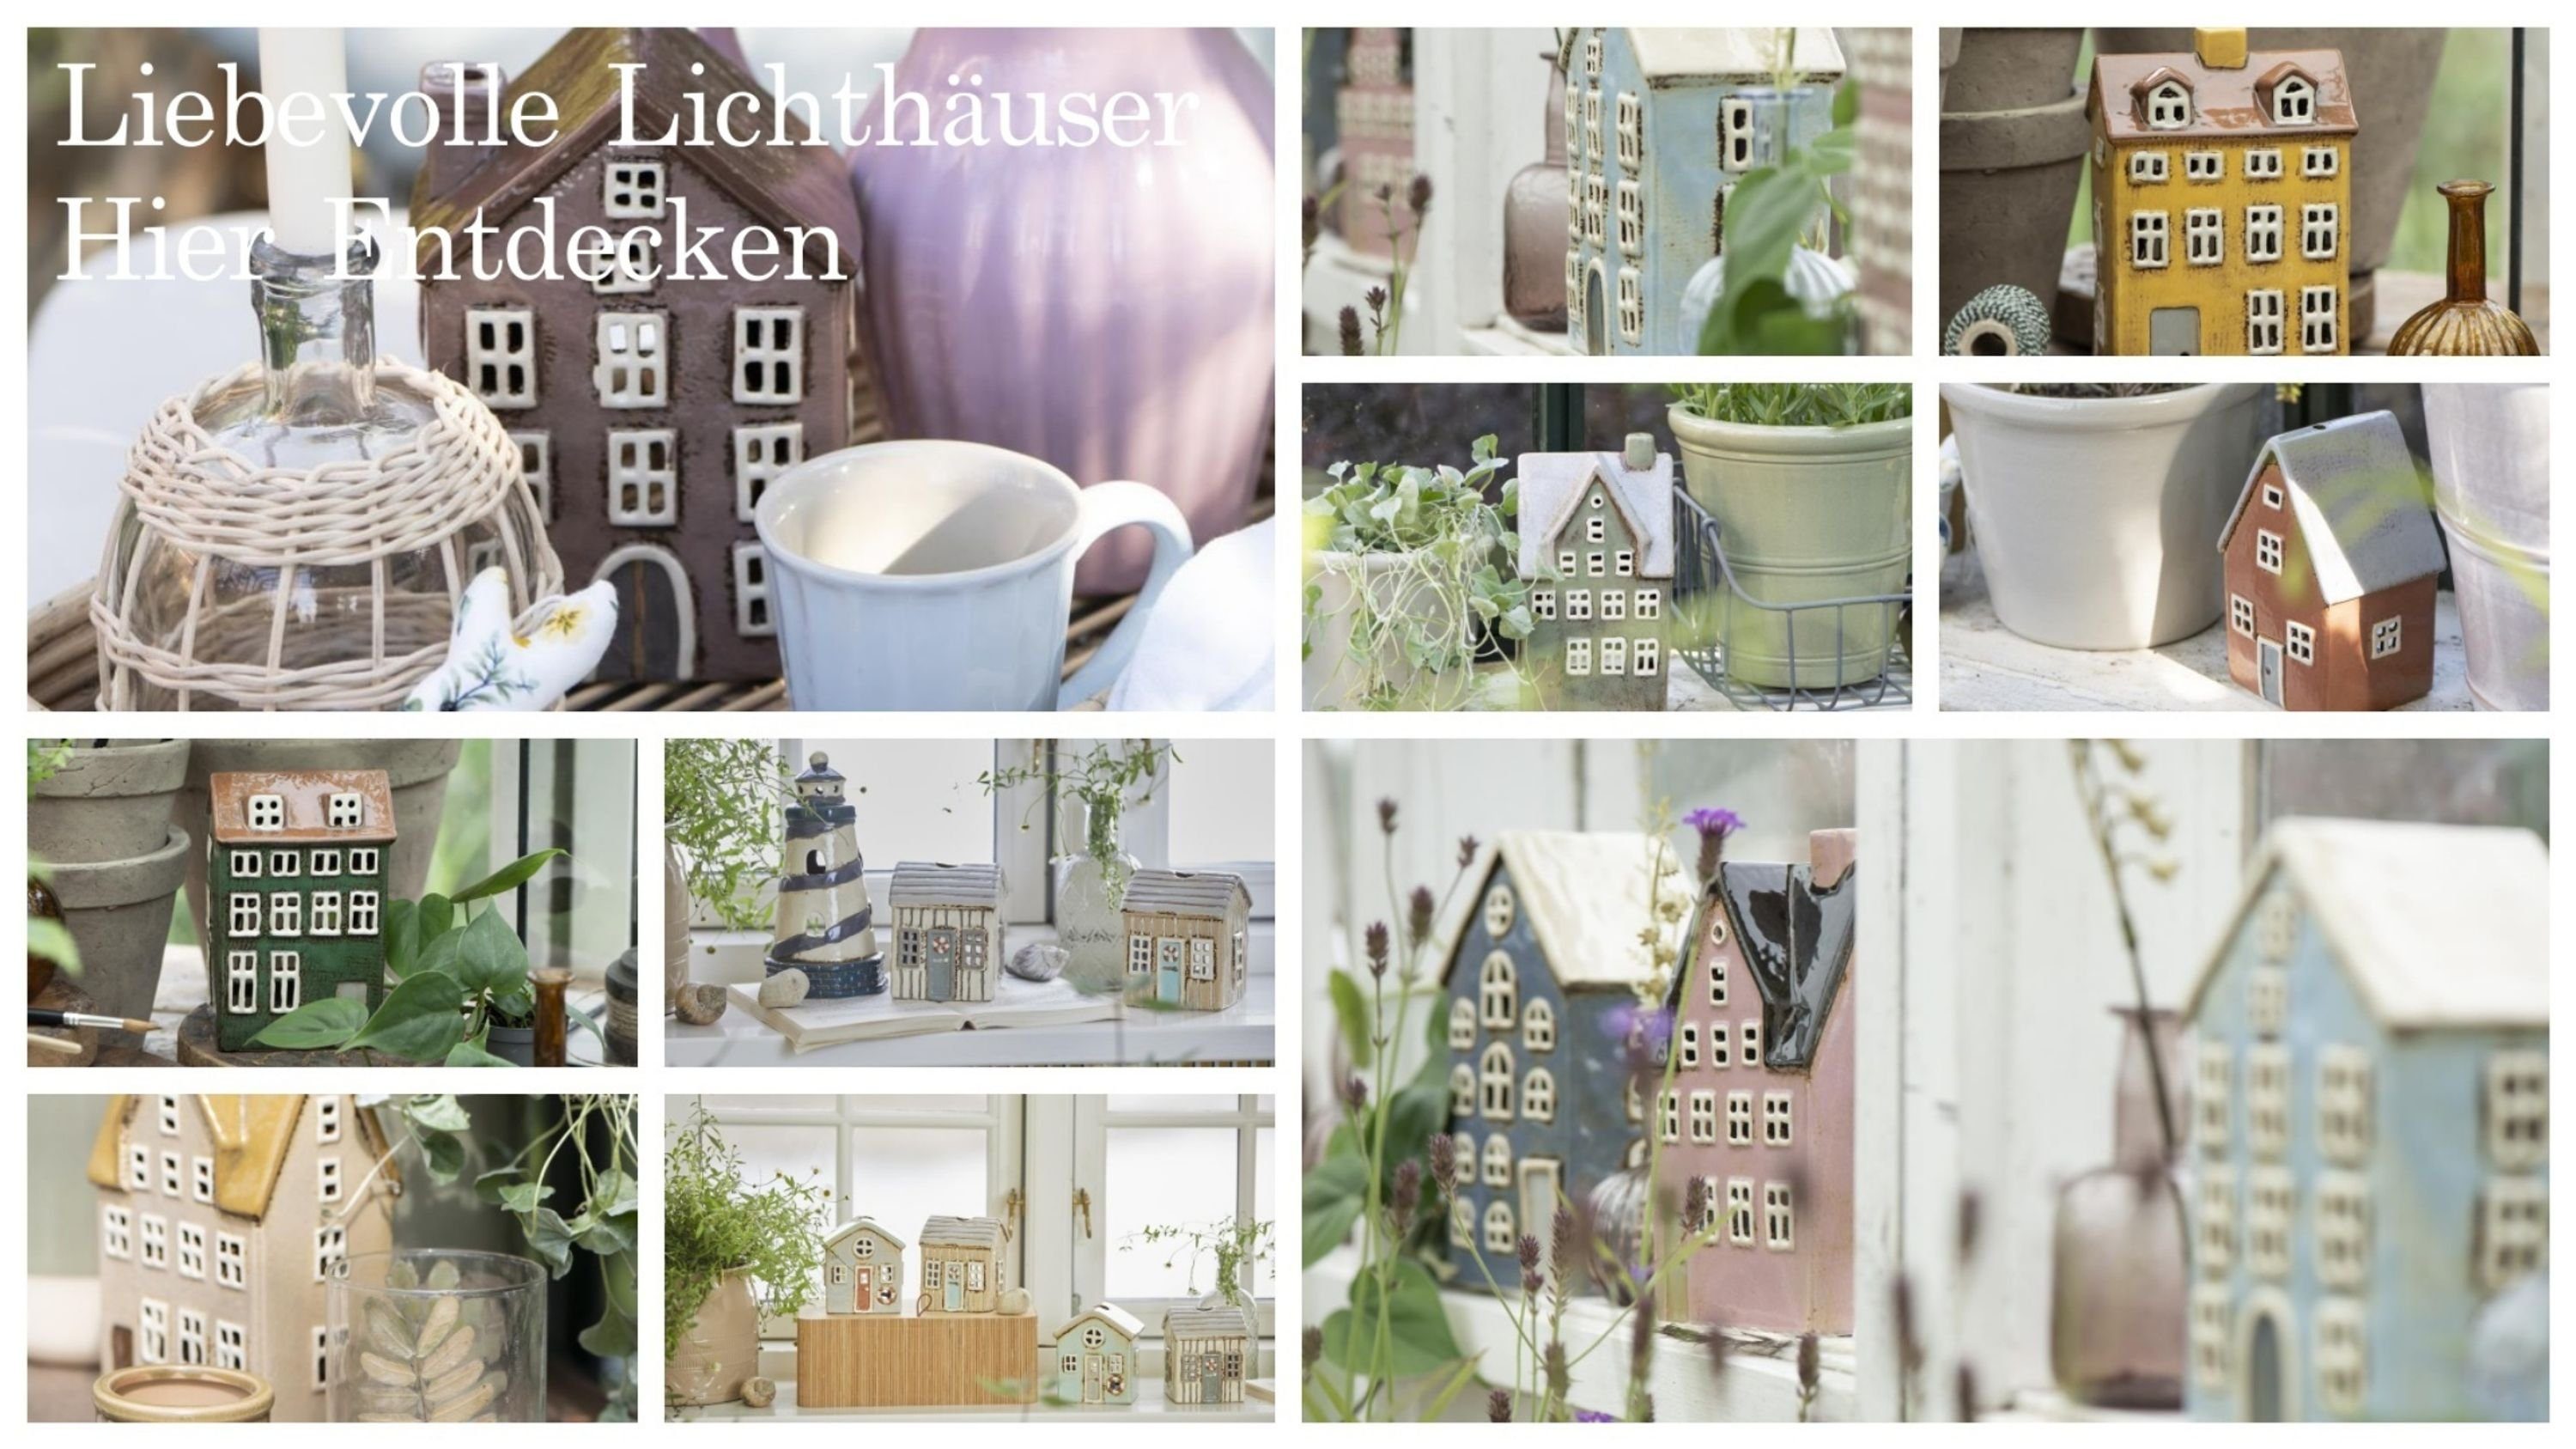 Kandelaber, Ringsted Teelichthaus Modell Stil. im Laursen skandinavischen Ib